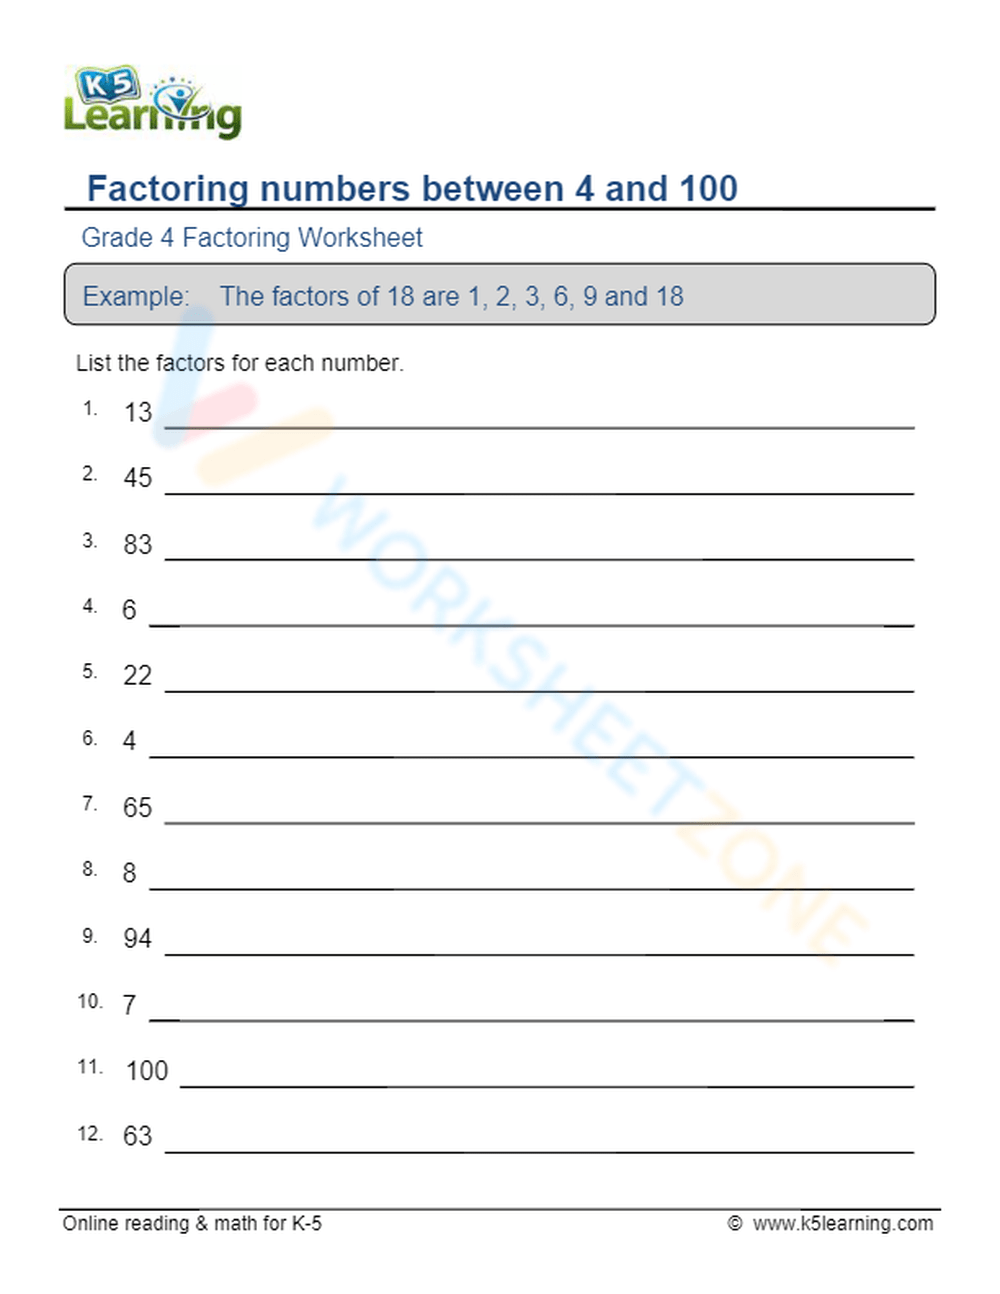 Factoring numbers between 4 and 100 5 | Worksheetzone